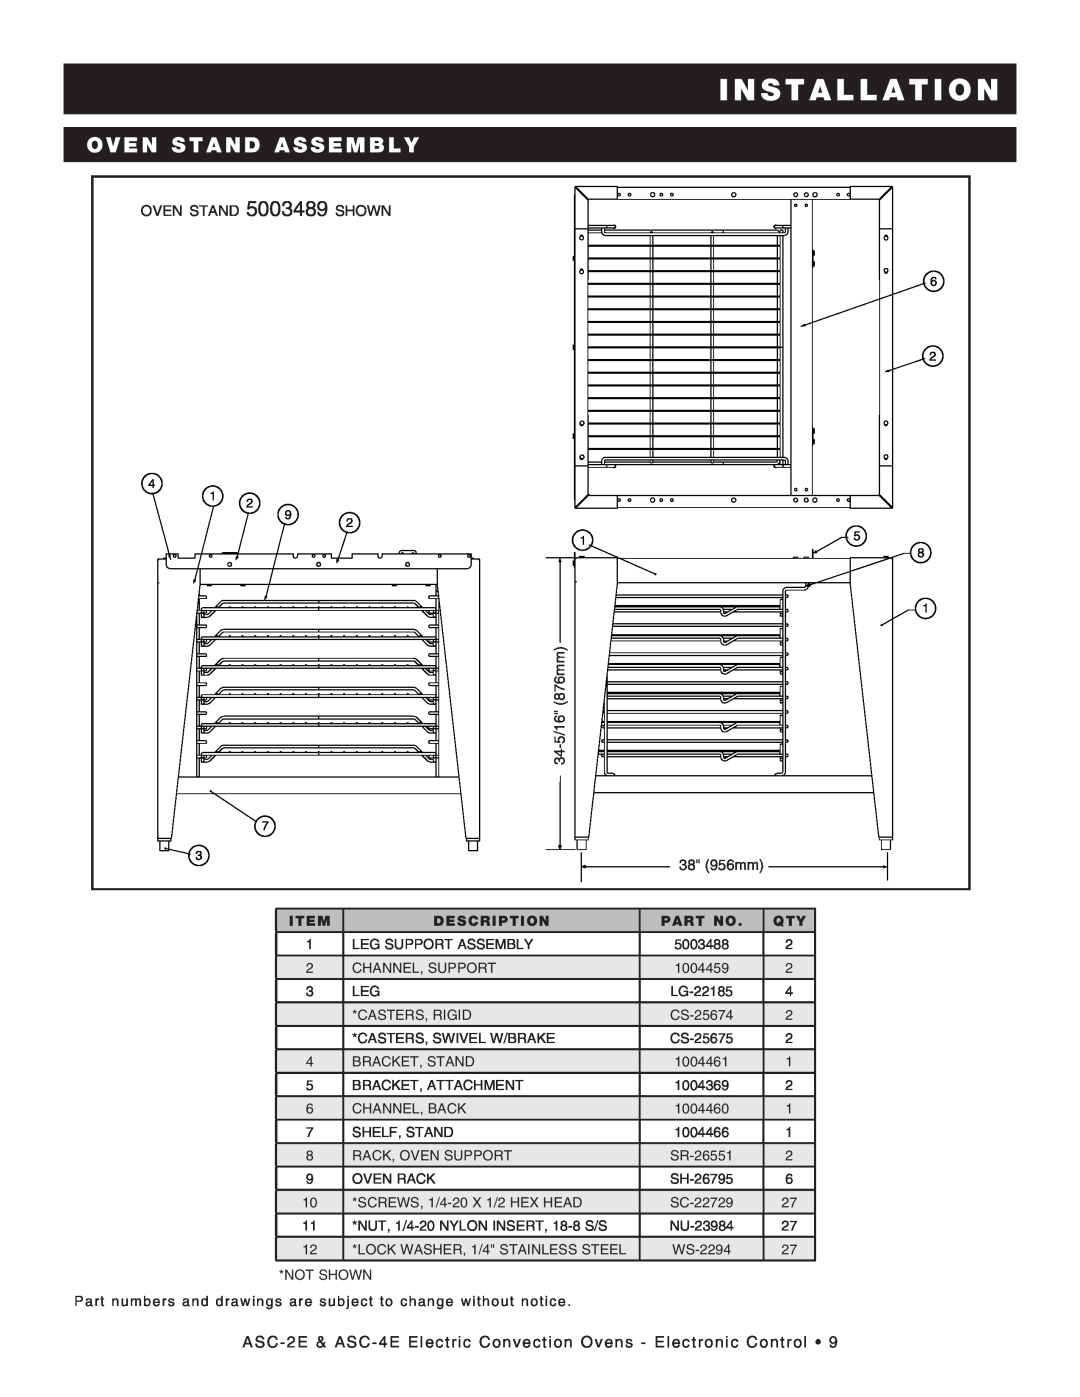 Alto-Shaam ASC-2E, ASC-4E manual Oven Stand Assembly, I N S T A L L A T I O N, Description, WS-2294 